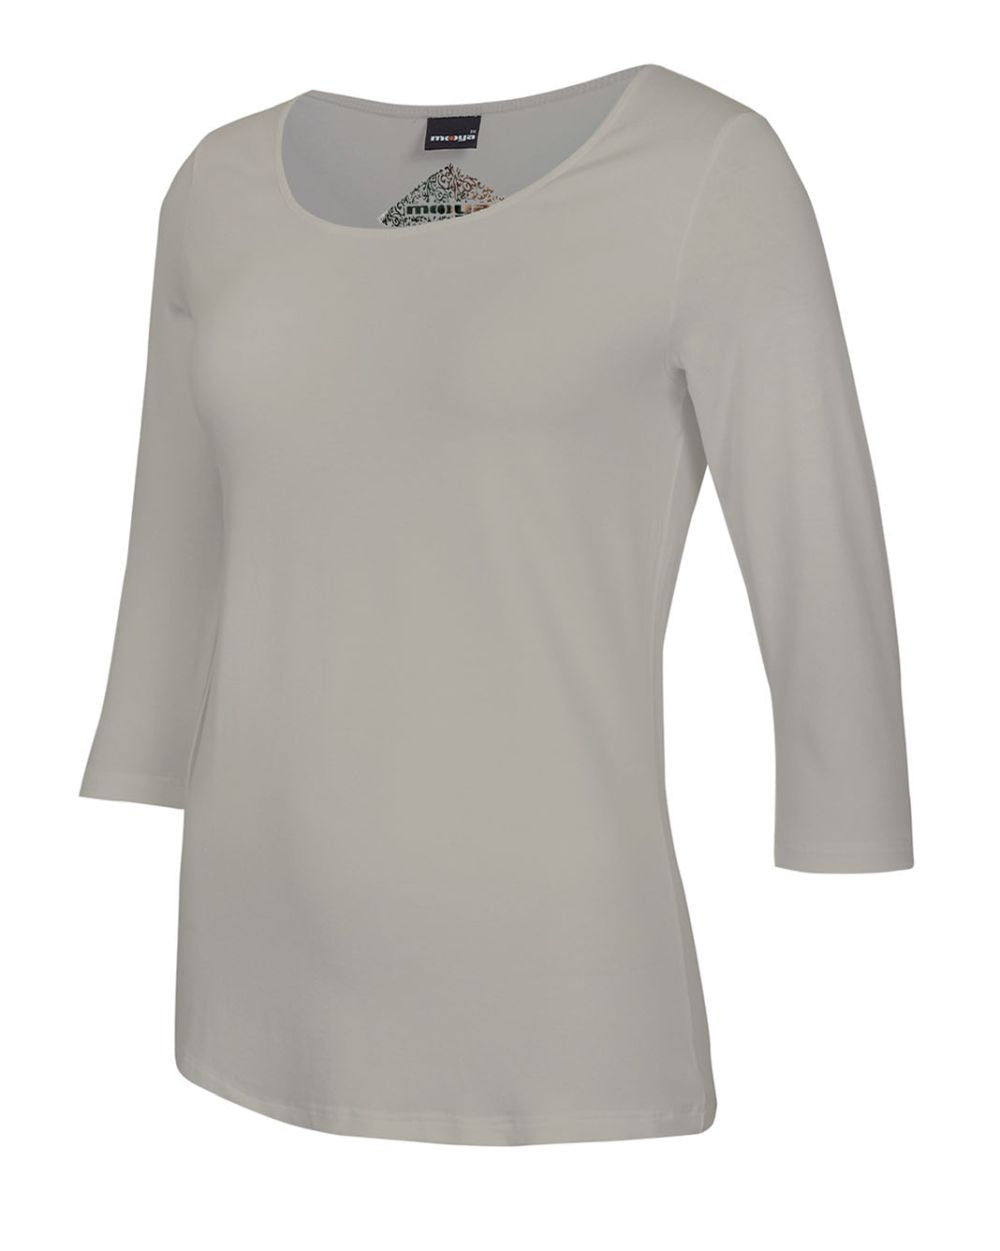 Damen-Shirt Angela, 3/4-Arm, Rundhalsausschnitt, Farbe Grey